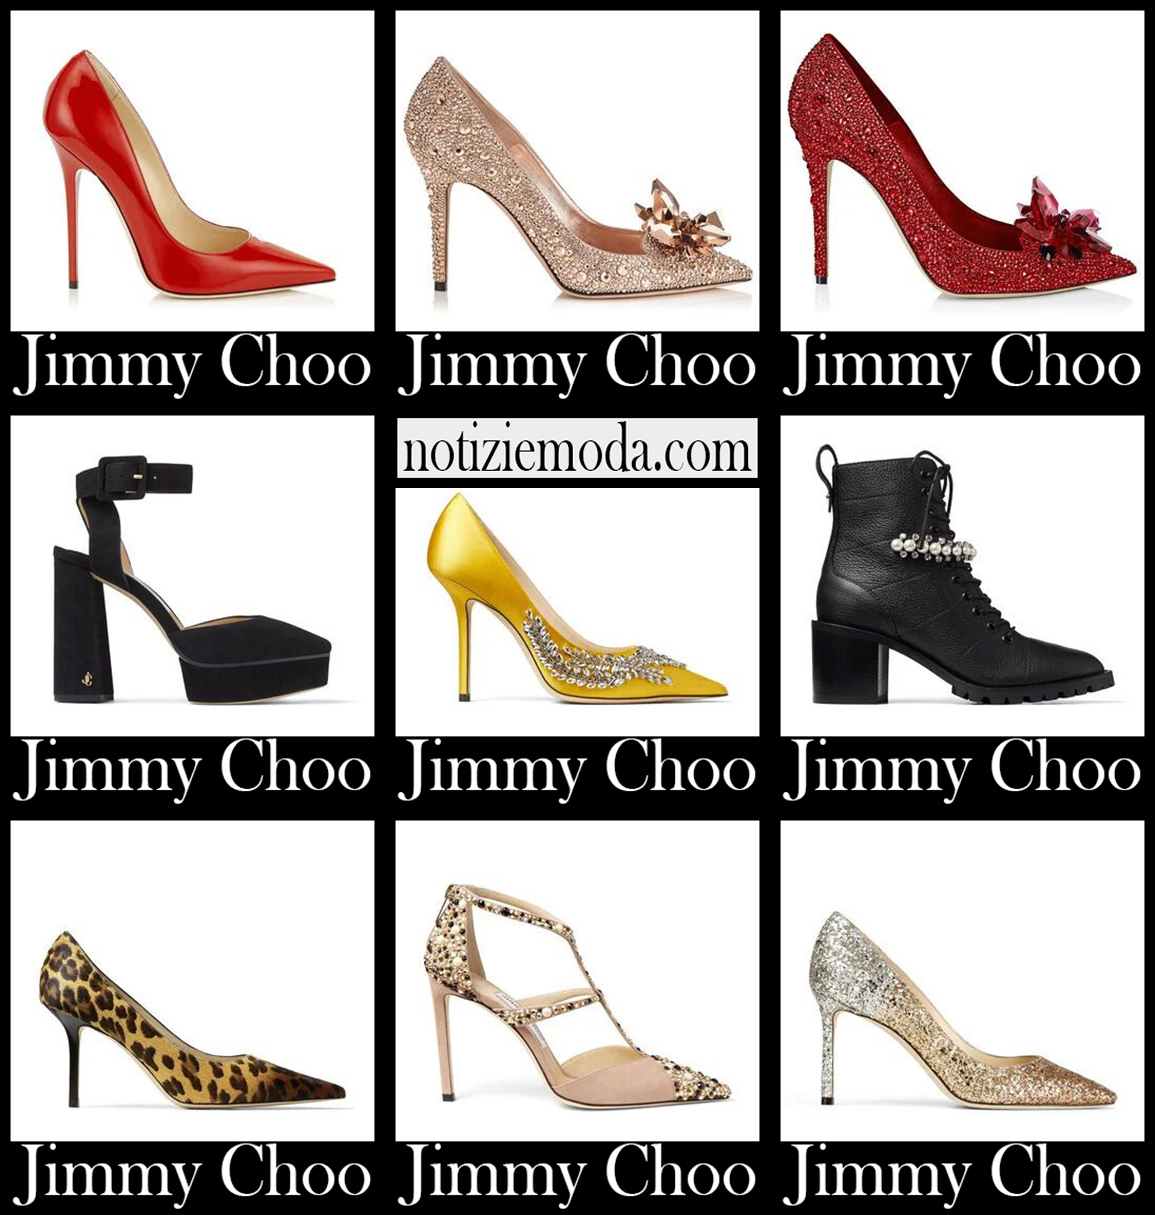 Nuovi arrivi scarpe Jimmy Choo 2021 calzature donna